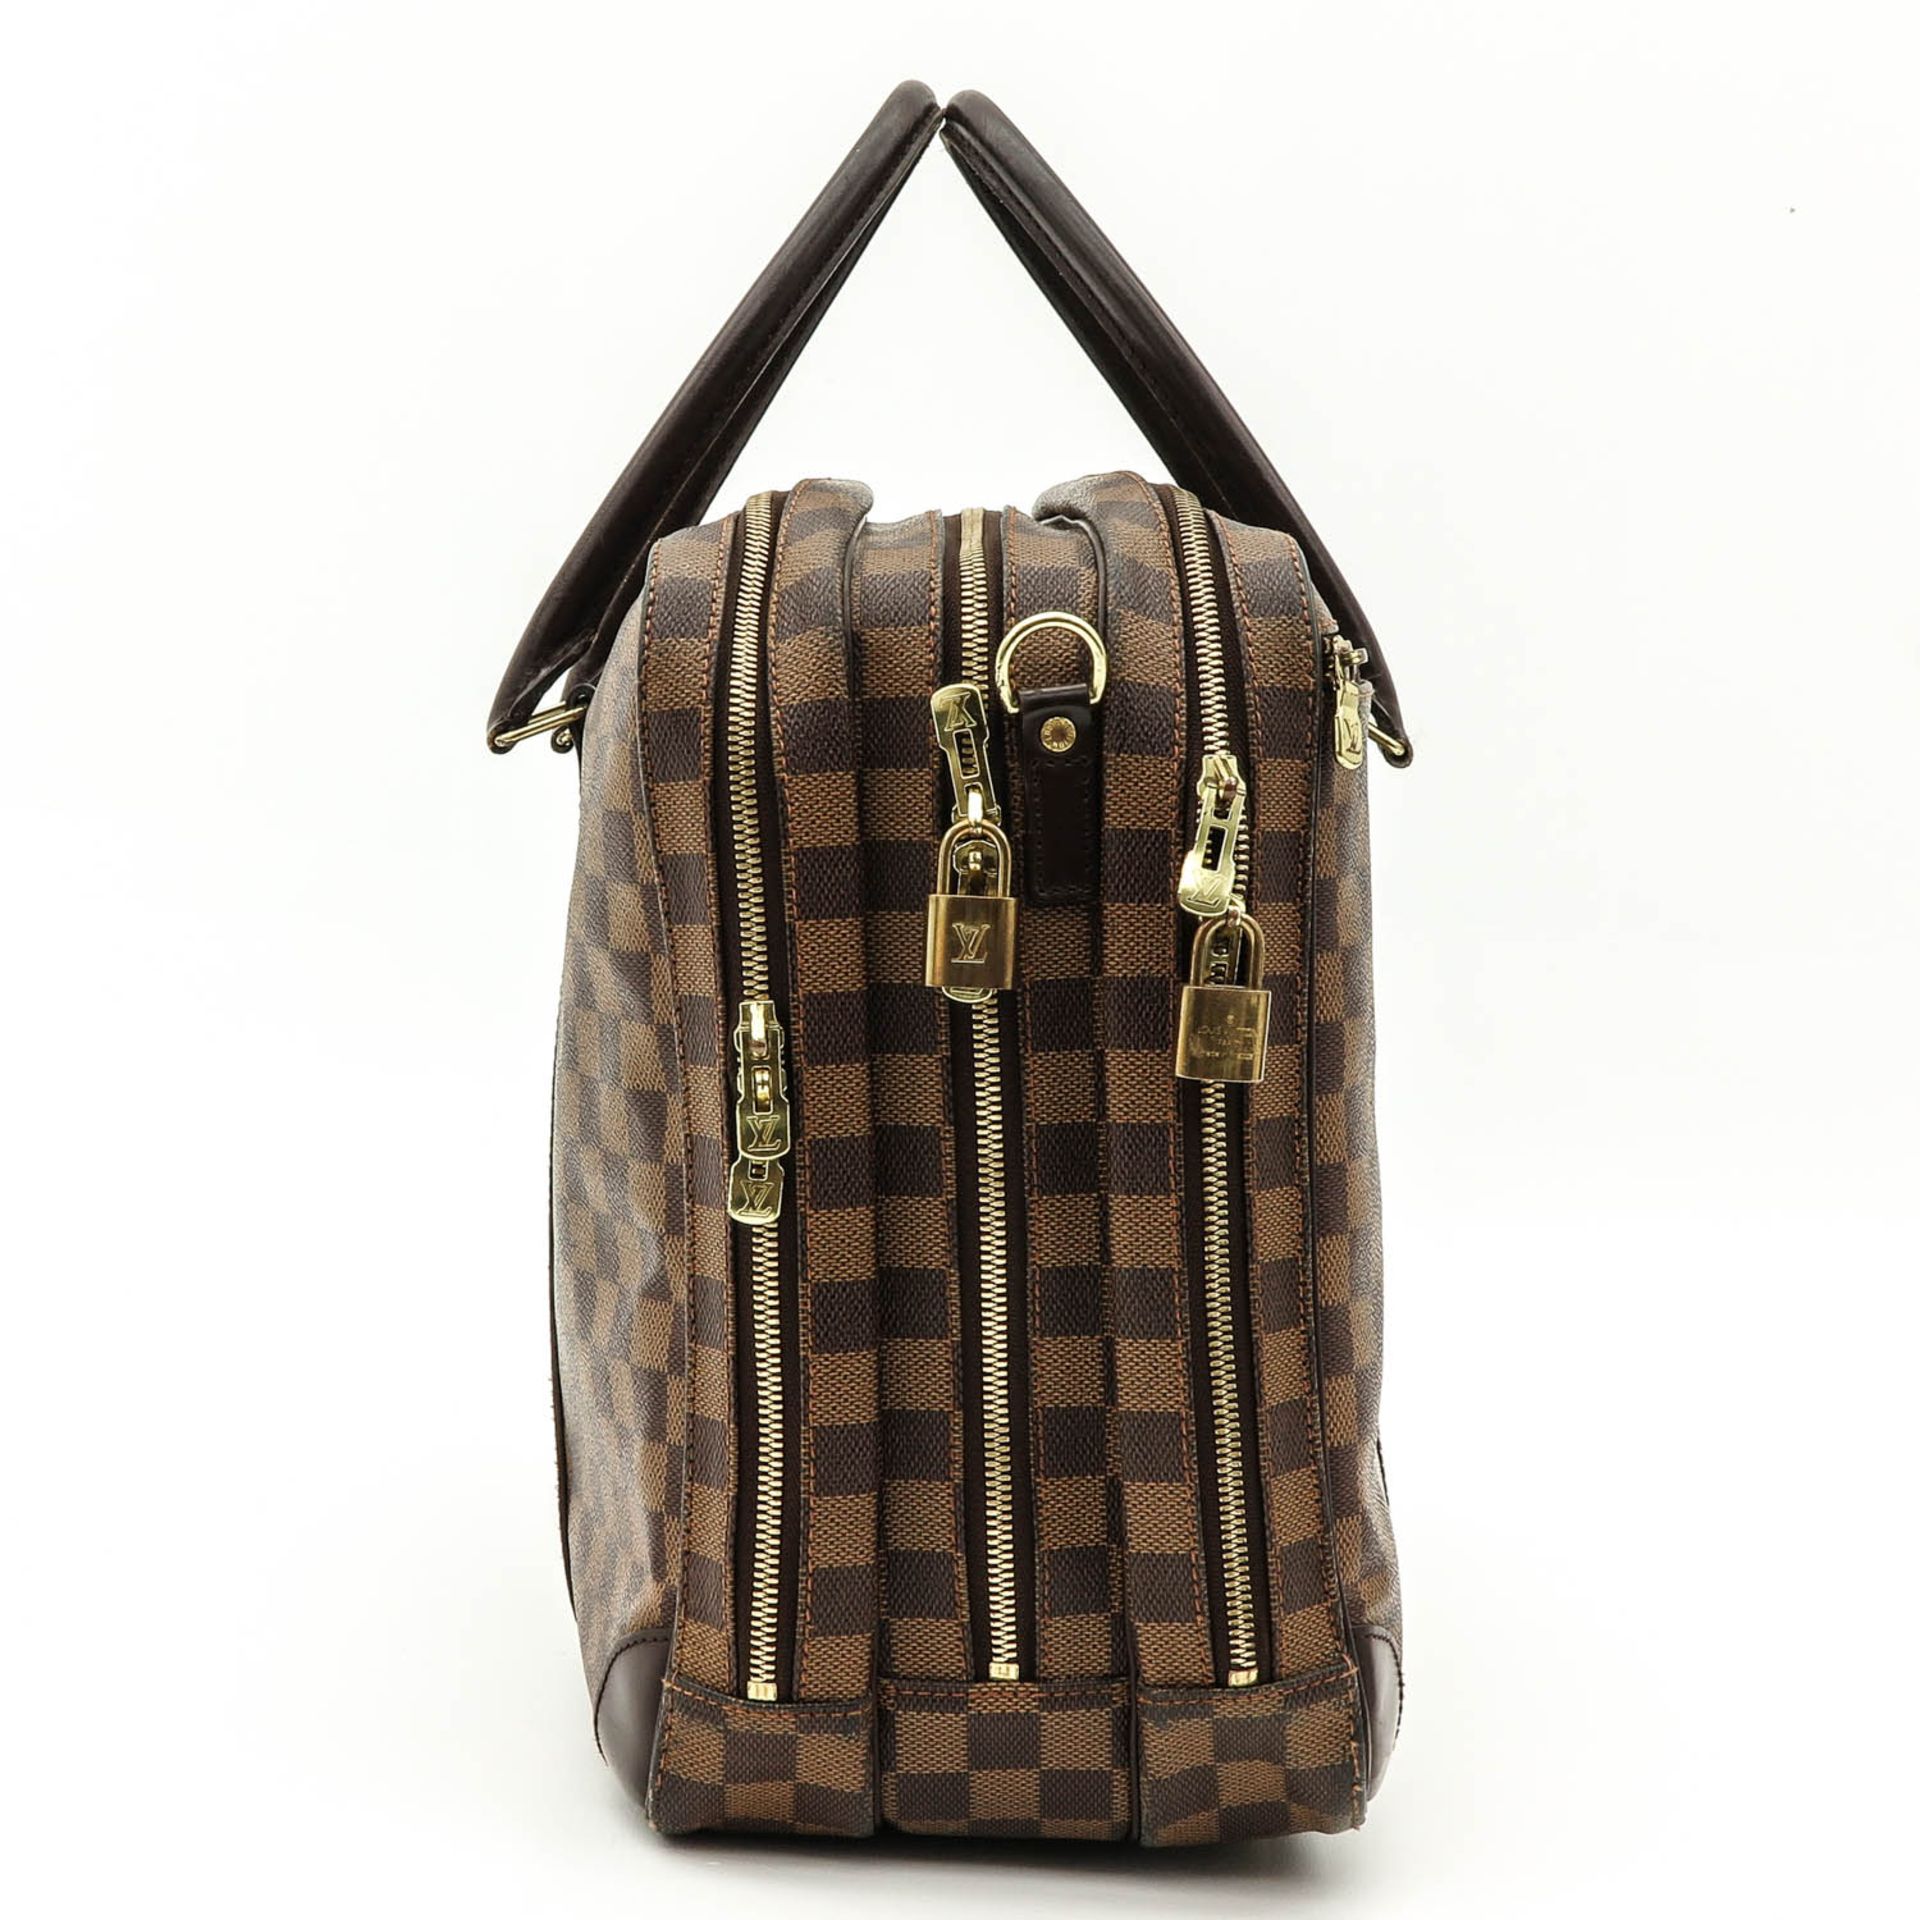 A Custom Made Louis Vuitton Travel Bag - Image 4 of 8